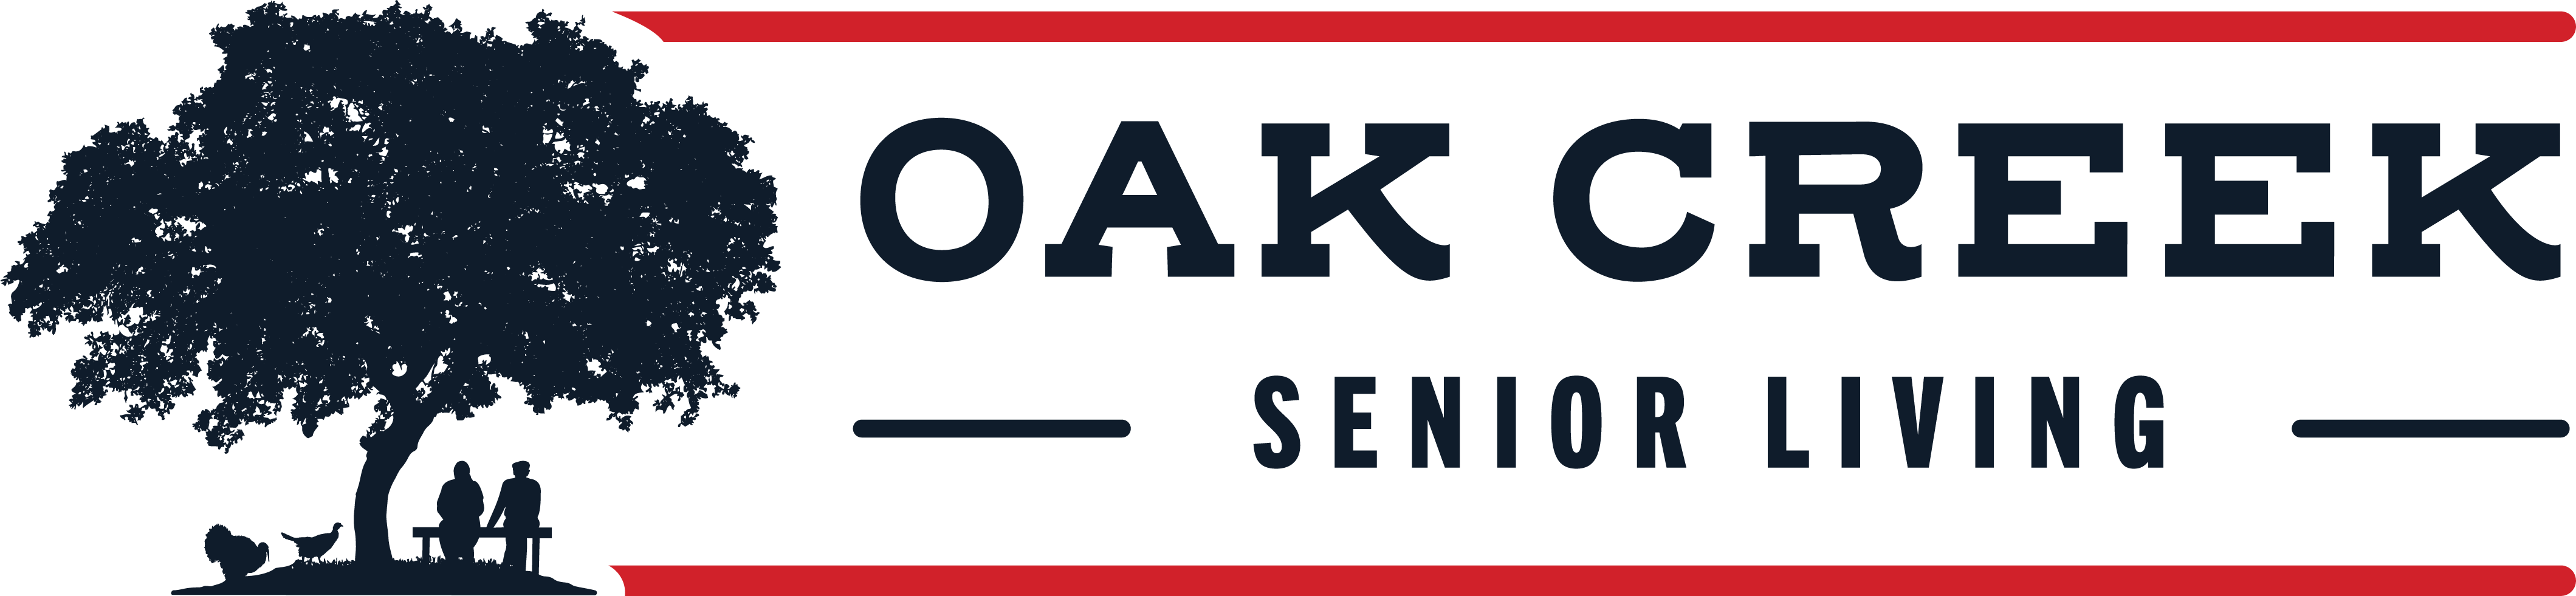 Oak Creek Senior Living